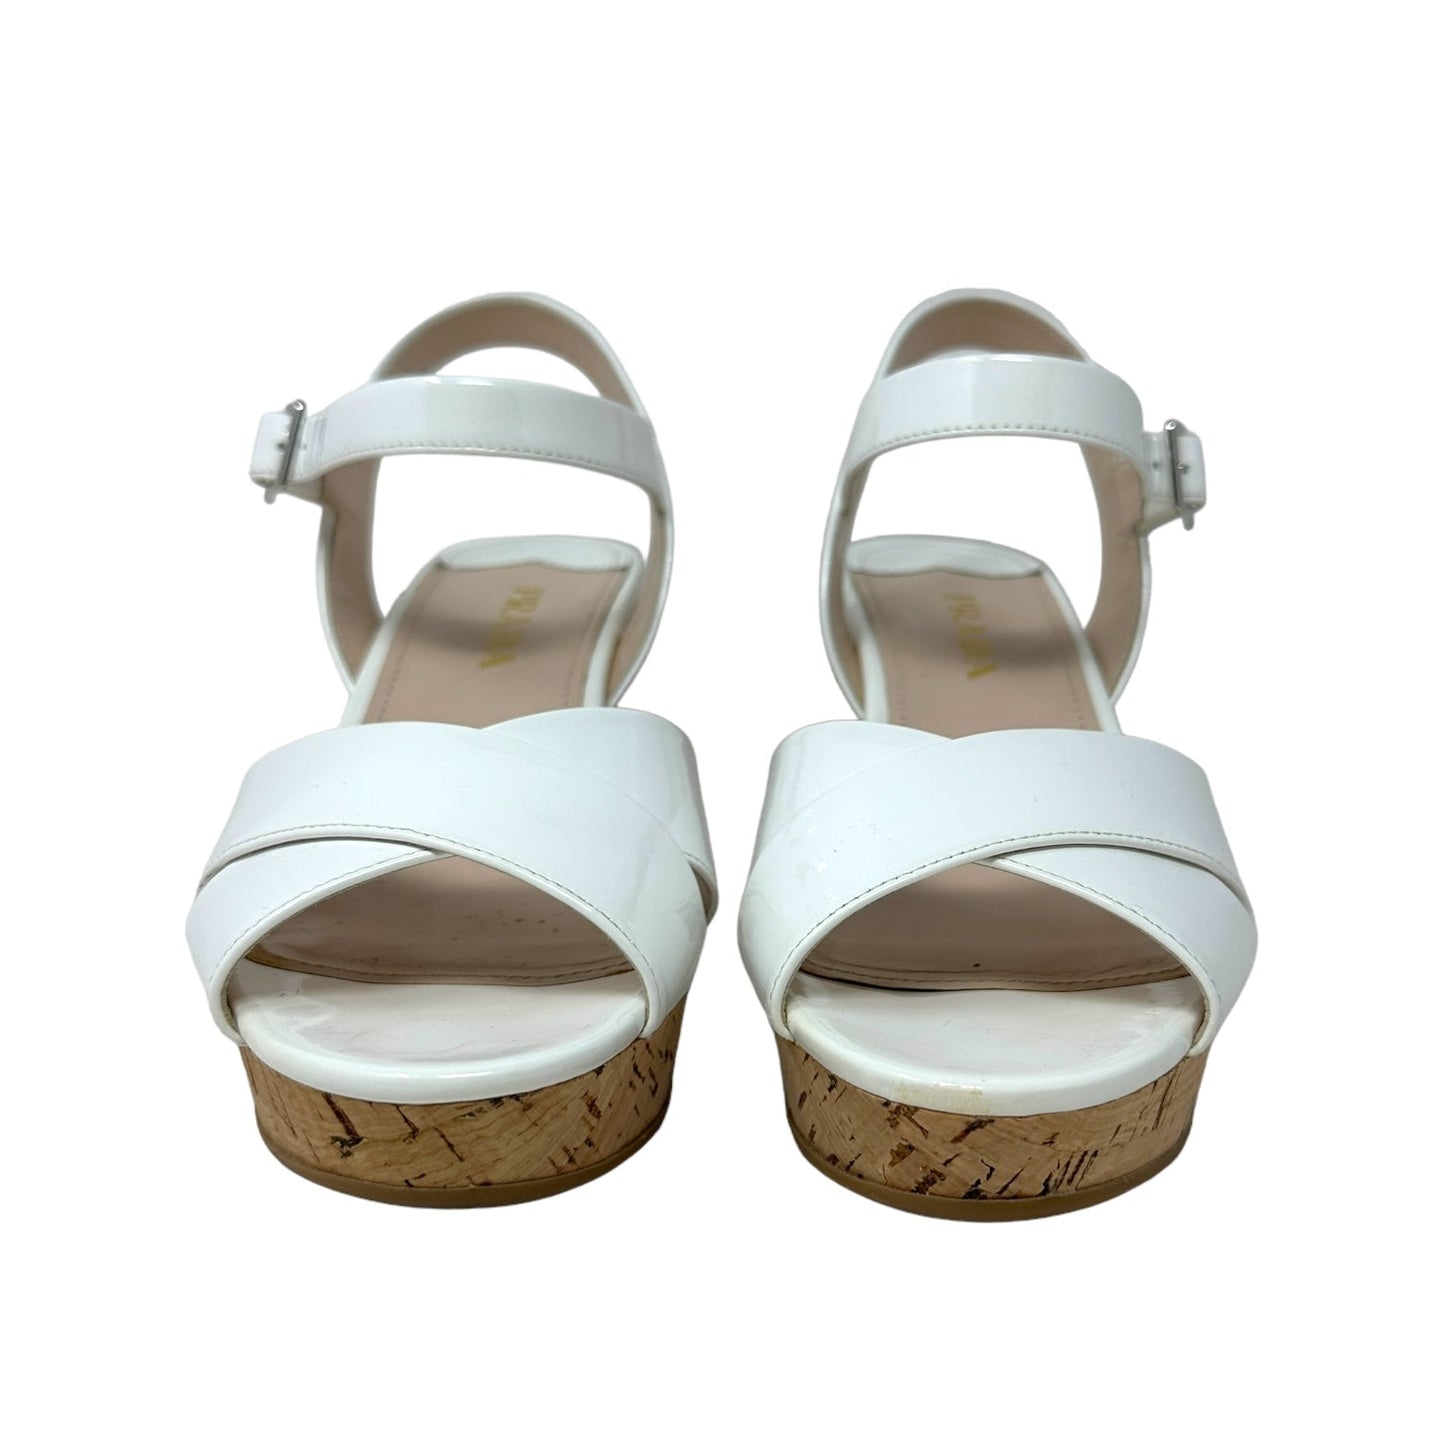 Calzature Donna Vernice 3 Patent Leather Cork Wedge Sandals, Blanco Luxury Designer By Prada  Size: 9